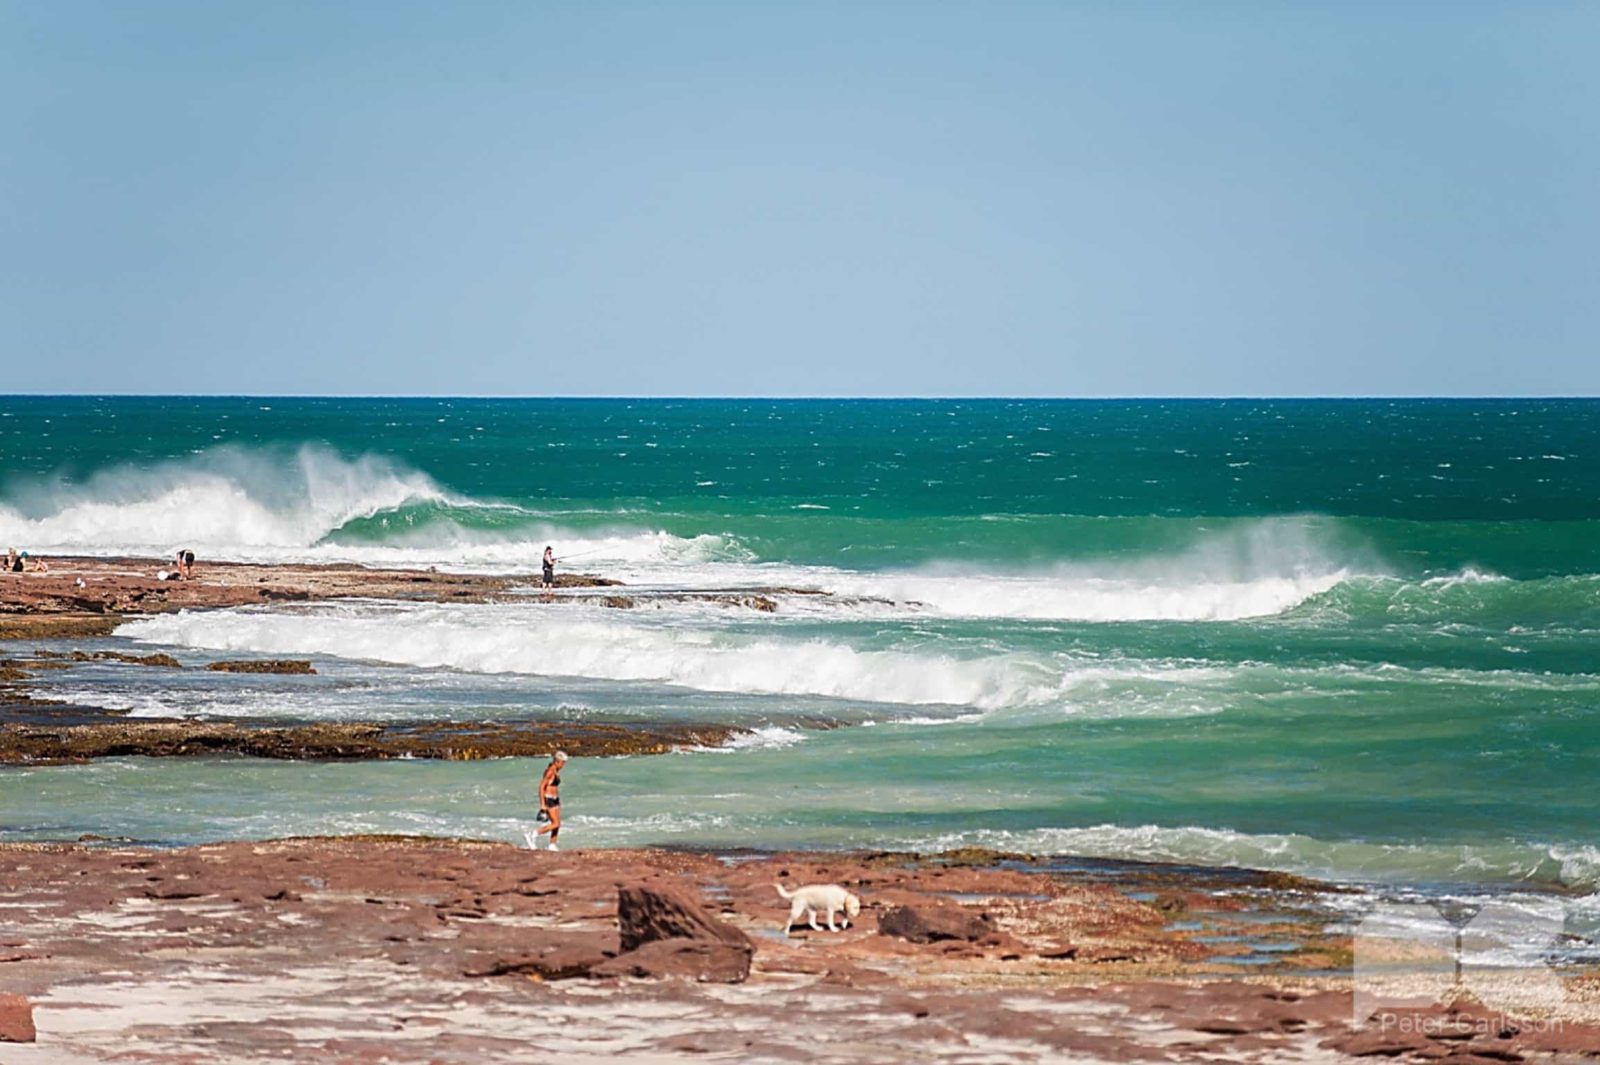 Jacques Point, Kalbarri, Western Australia